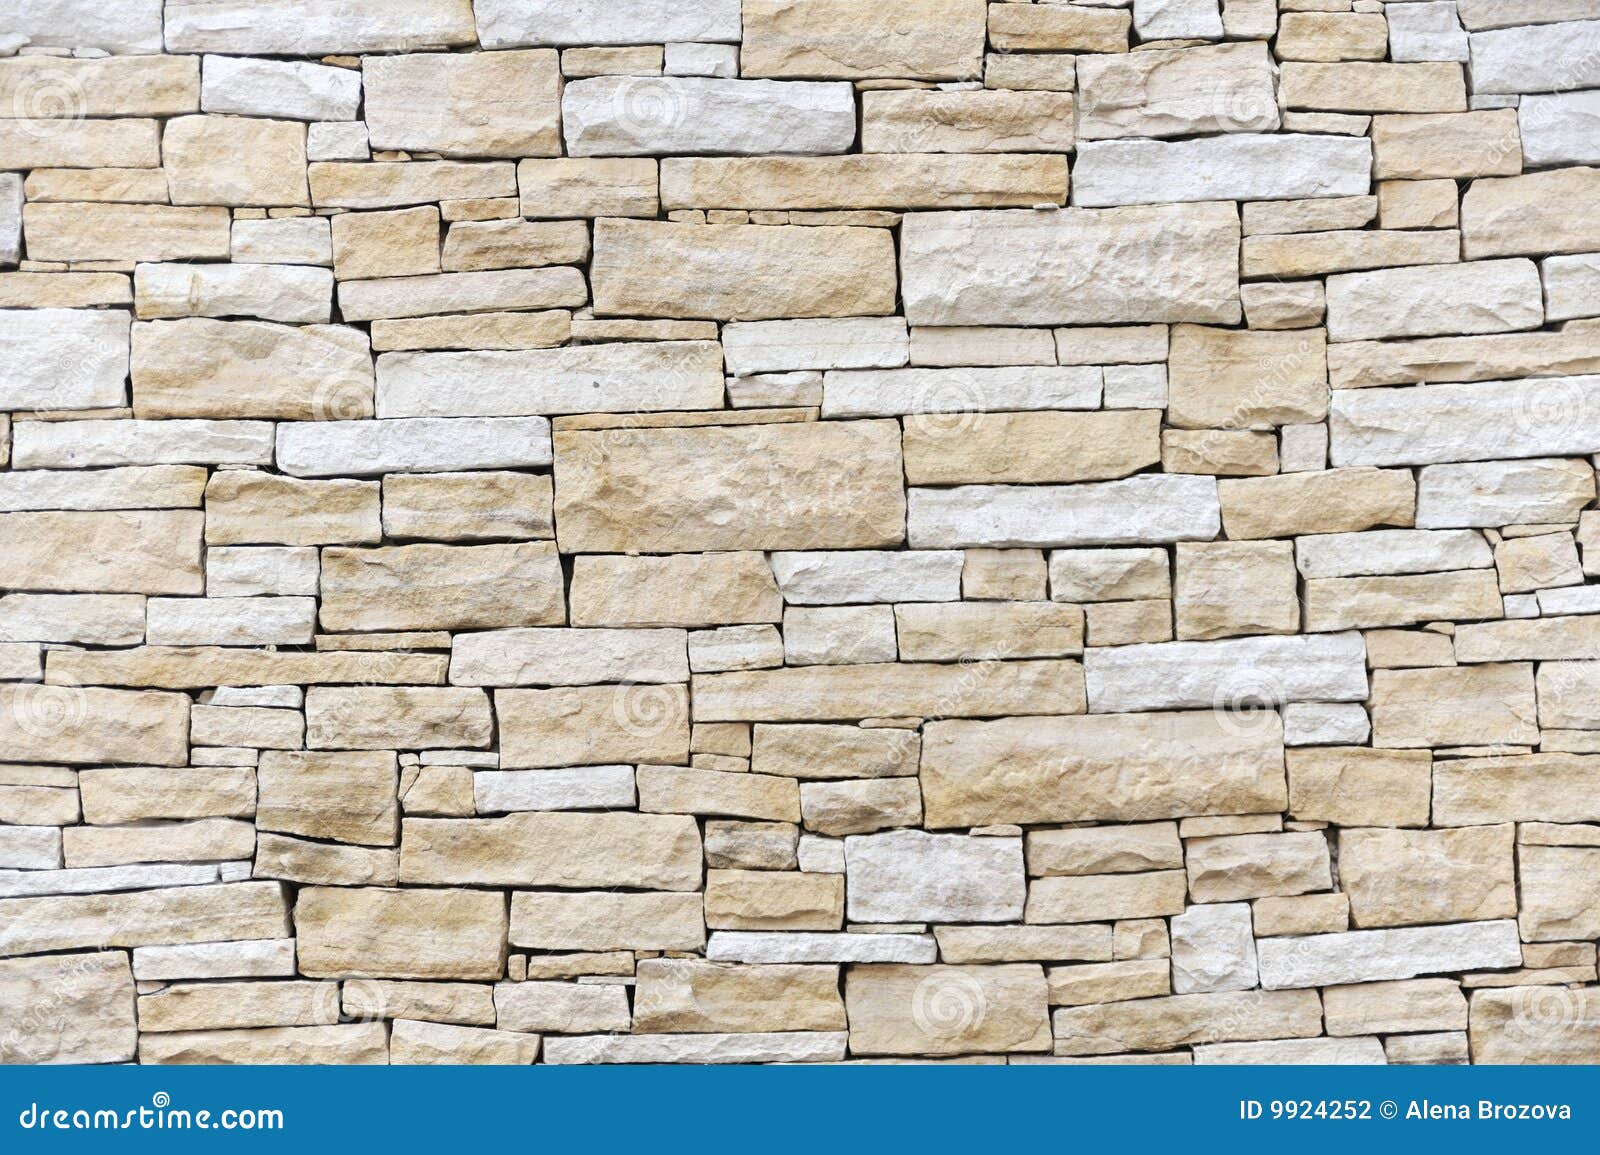 wall made from sandstone bricks